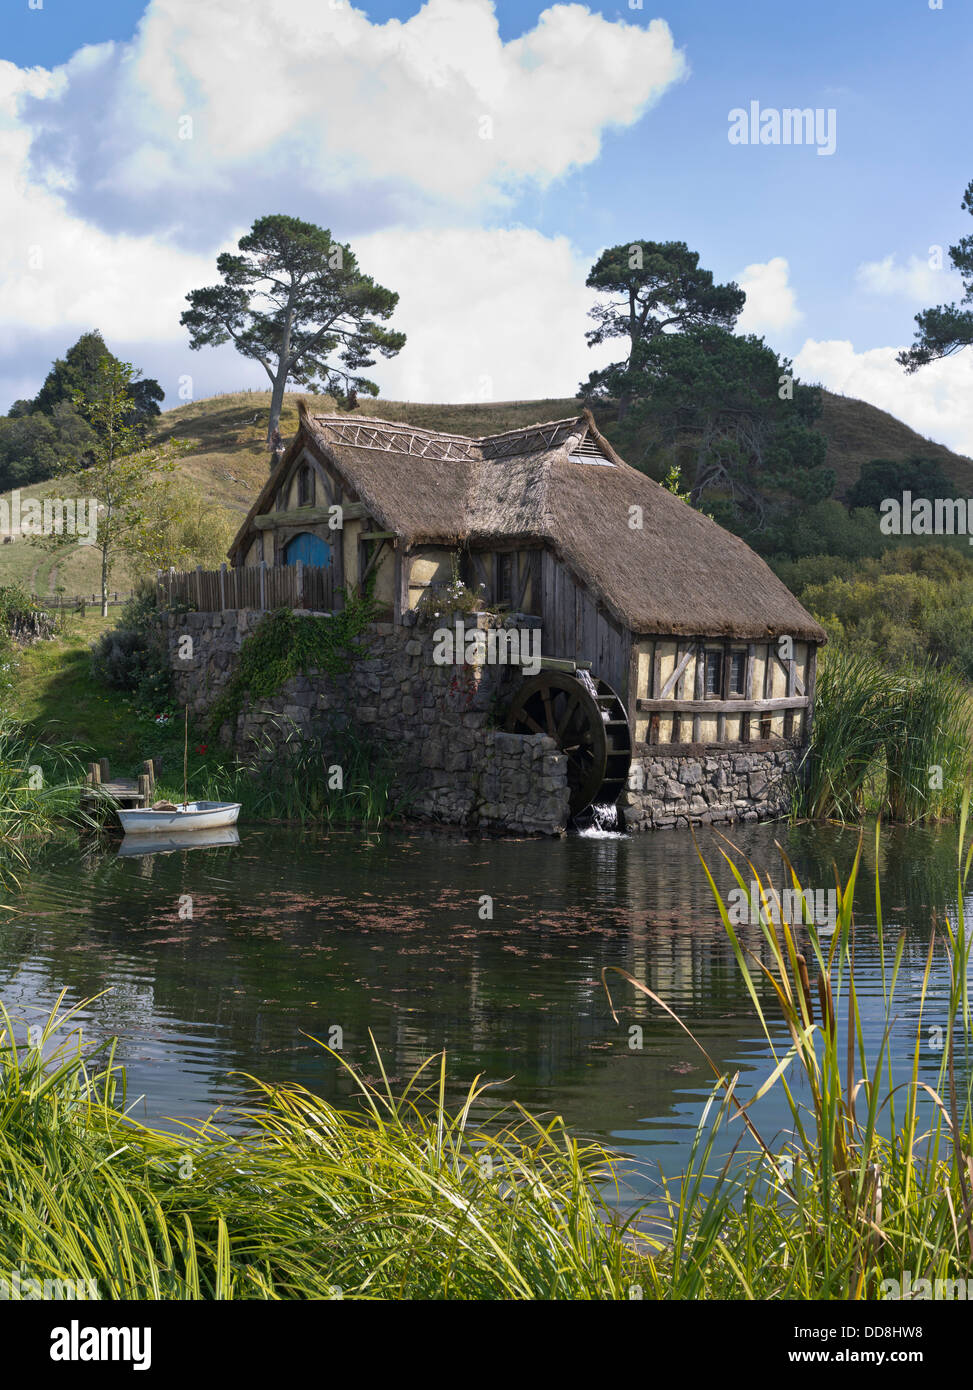 dh Herr der Ringe HOBBINGEN Neuseeland Hobbits Mühle Film set Film Website Filme Hobbit Stockfoto